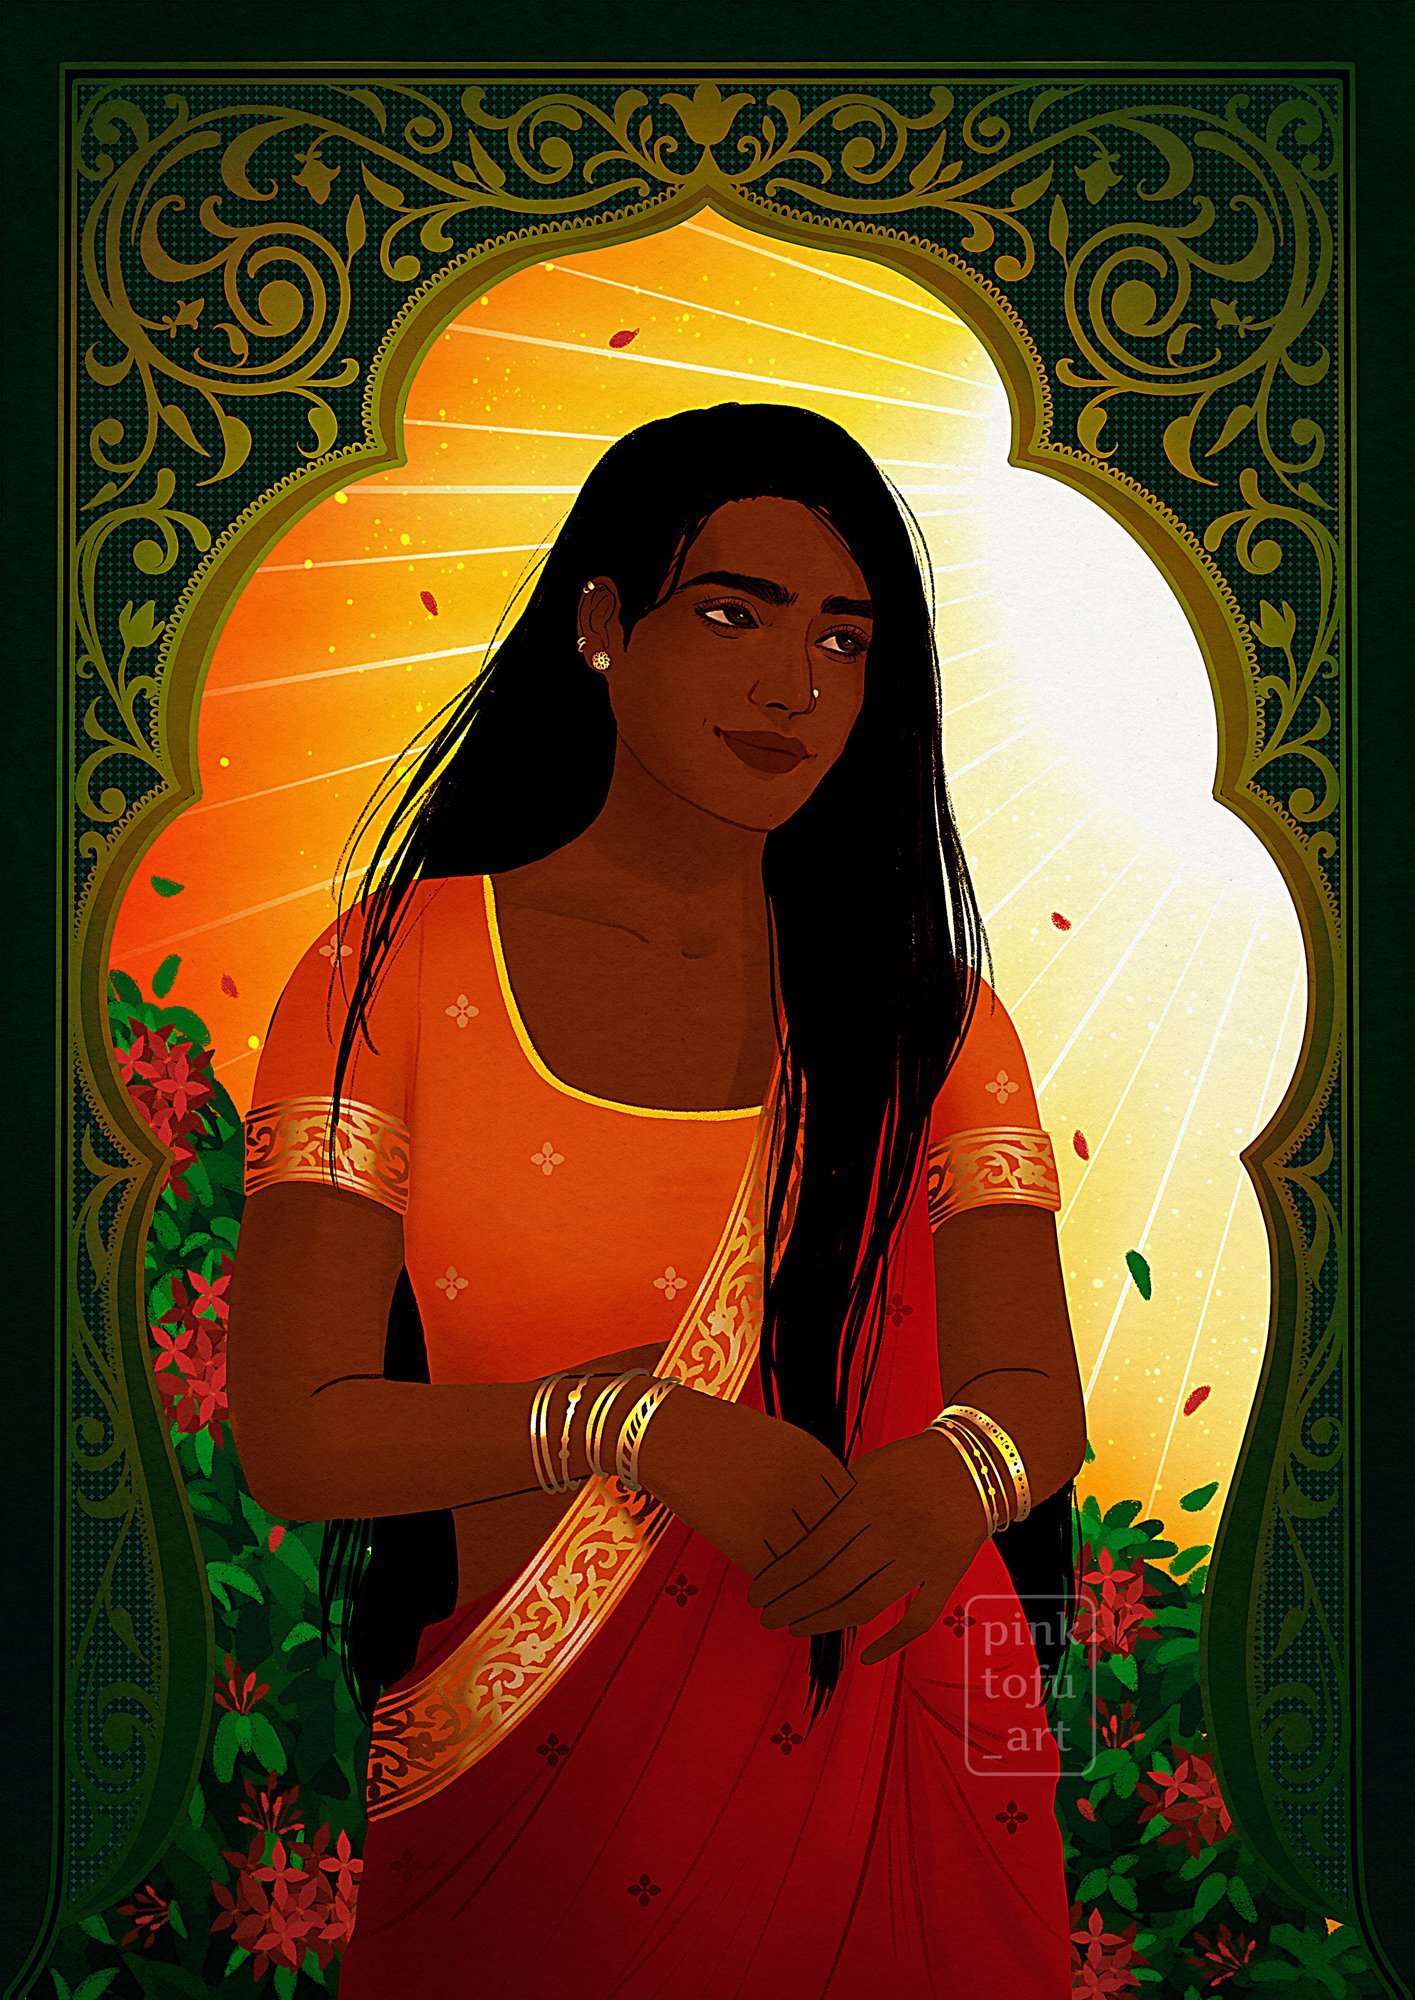 Character card made for Author Tasha Suri and her novel "The Jasmine Throne"